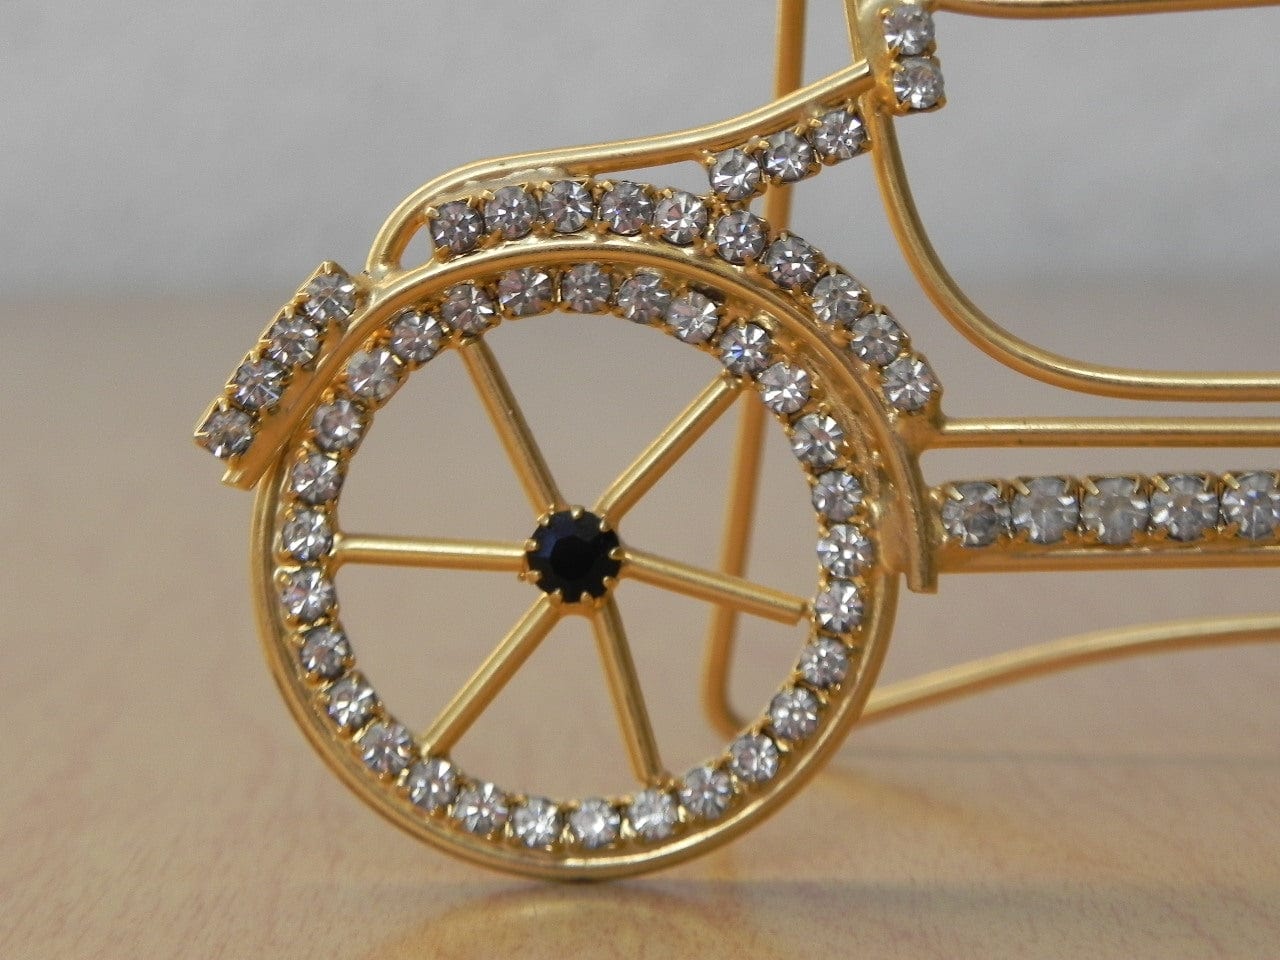 I Like Mike's Mid Century Modern Clock Small Jeweled Gold Car Desk Clock (Chitty Chitty Bang Bang)